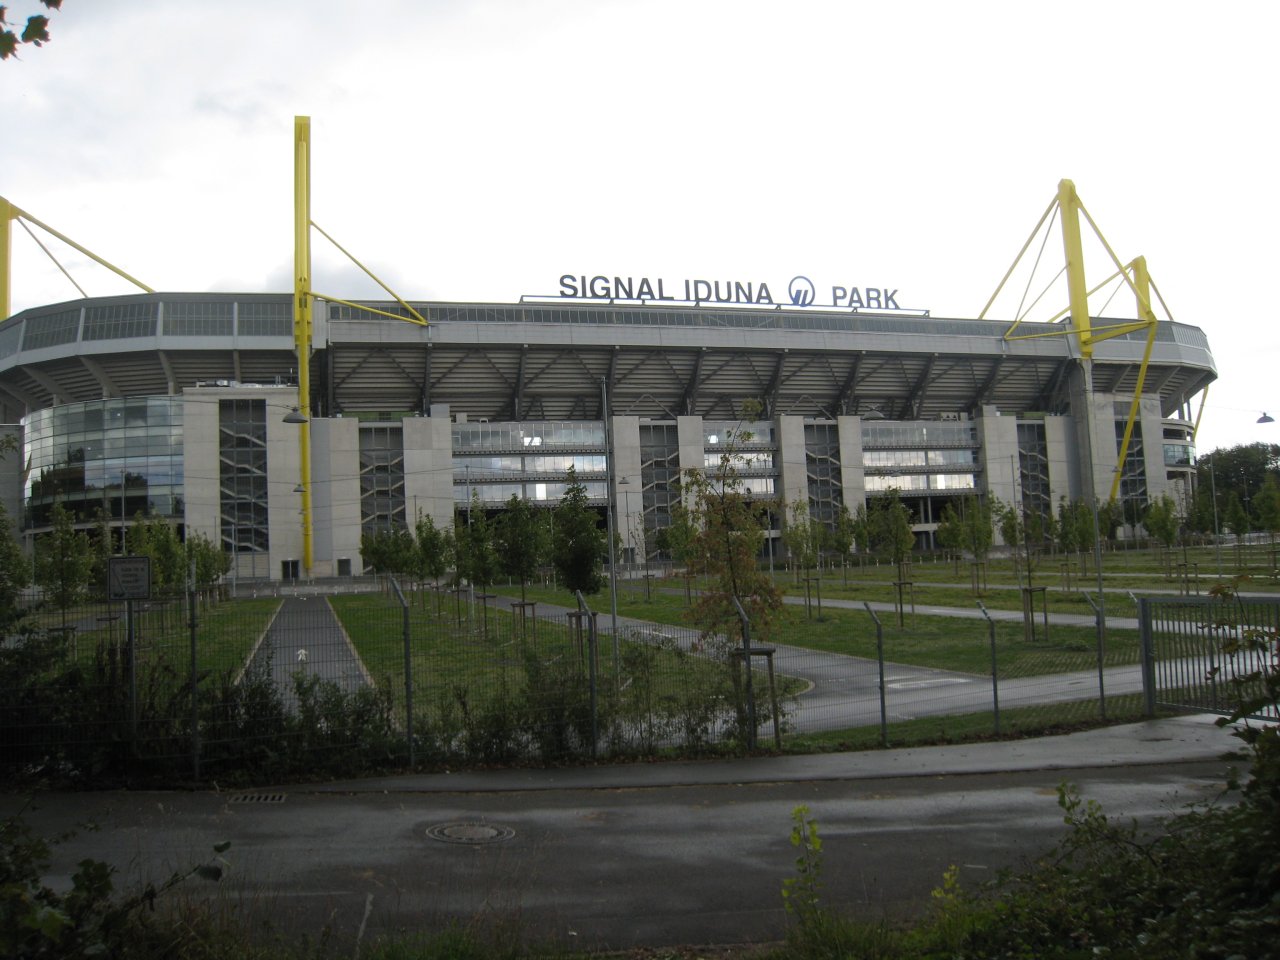 Westfalenstadion aka Signal Iduna Park